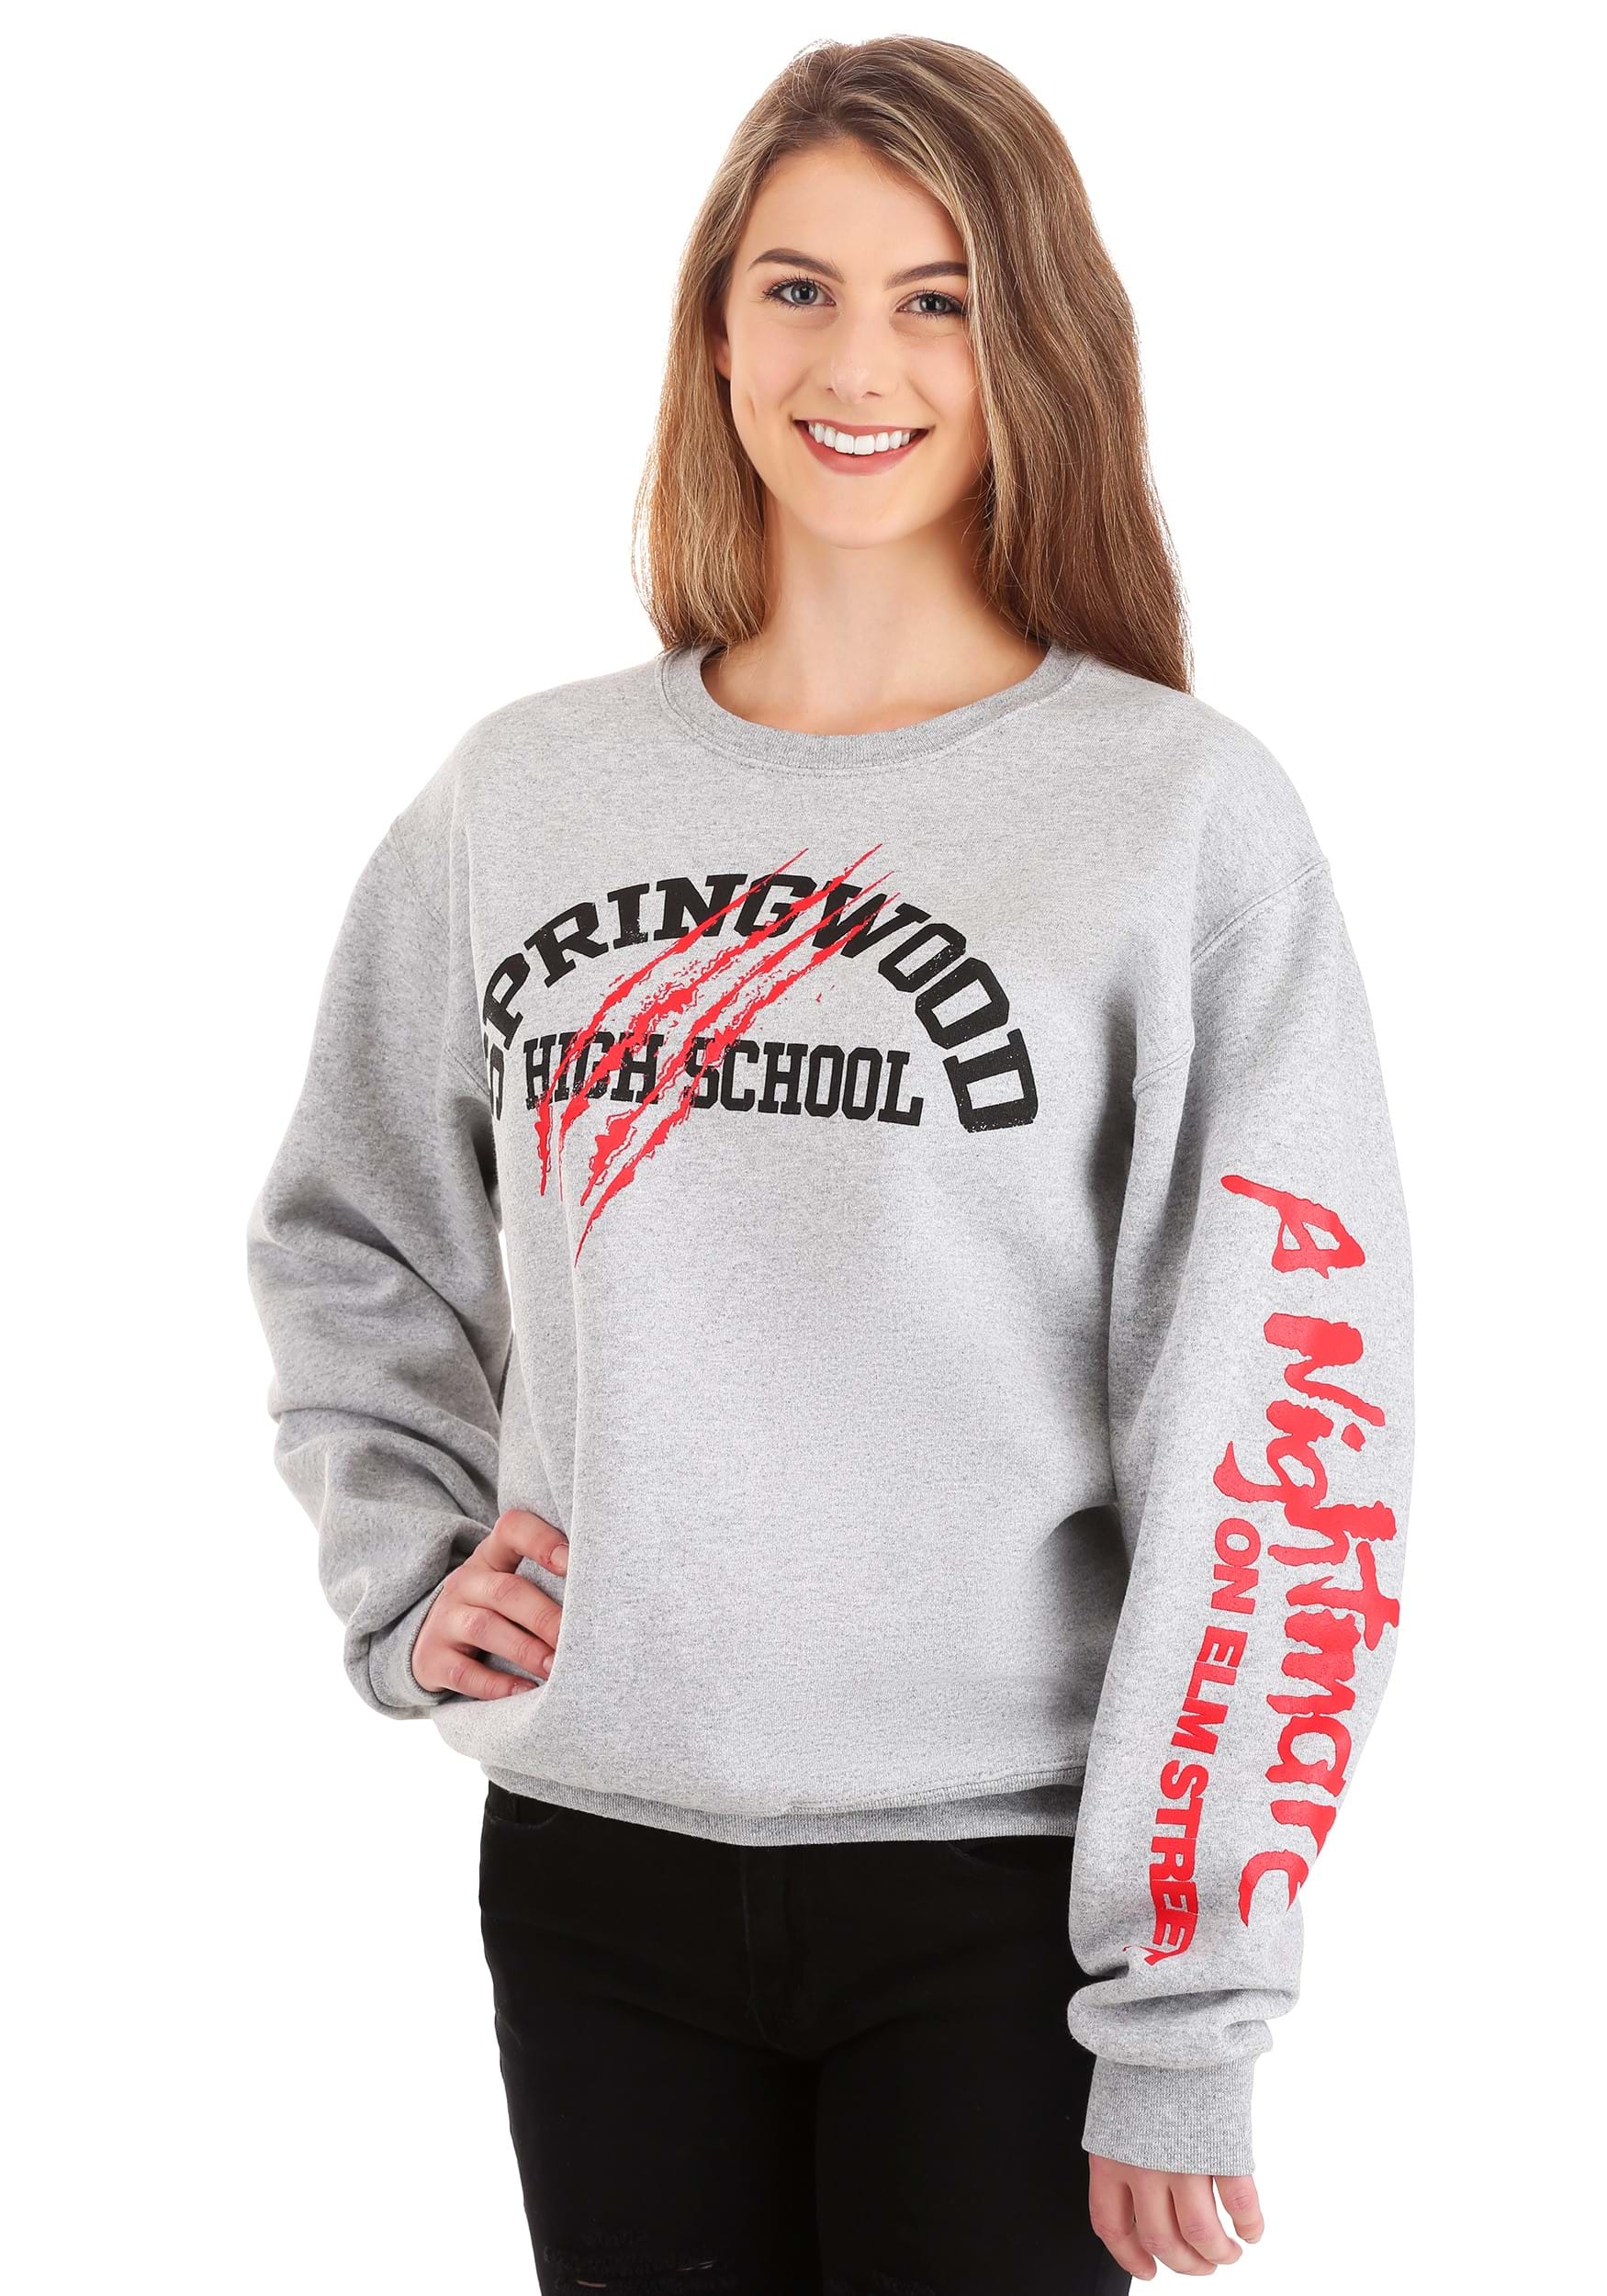 Nightmare on Elm Street Springwood High School Sweatshirt